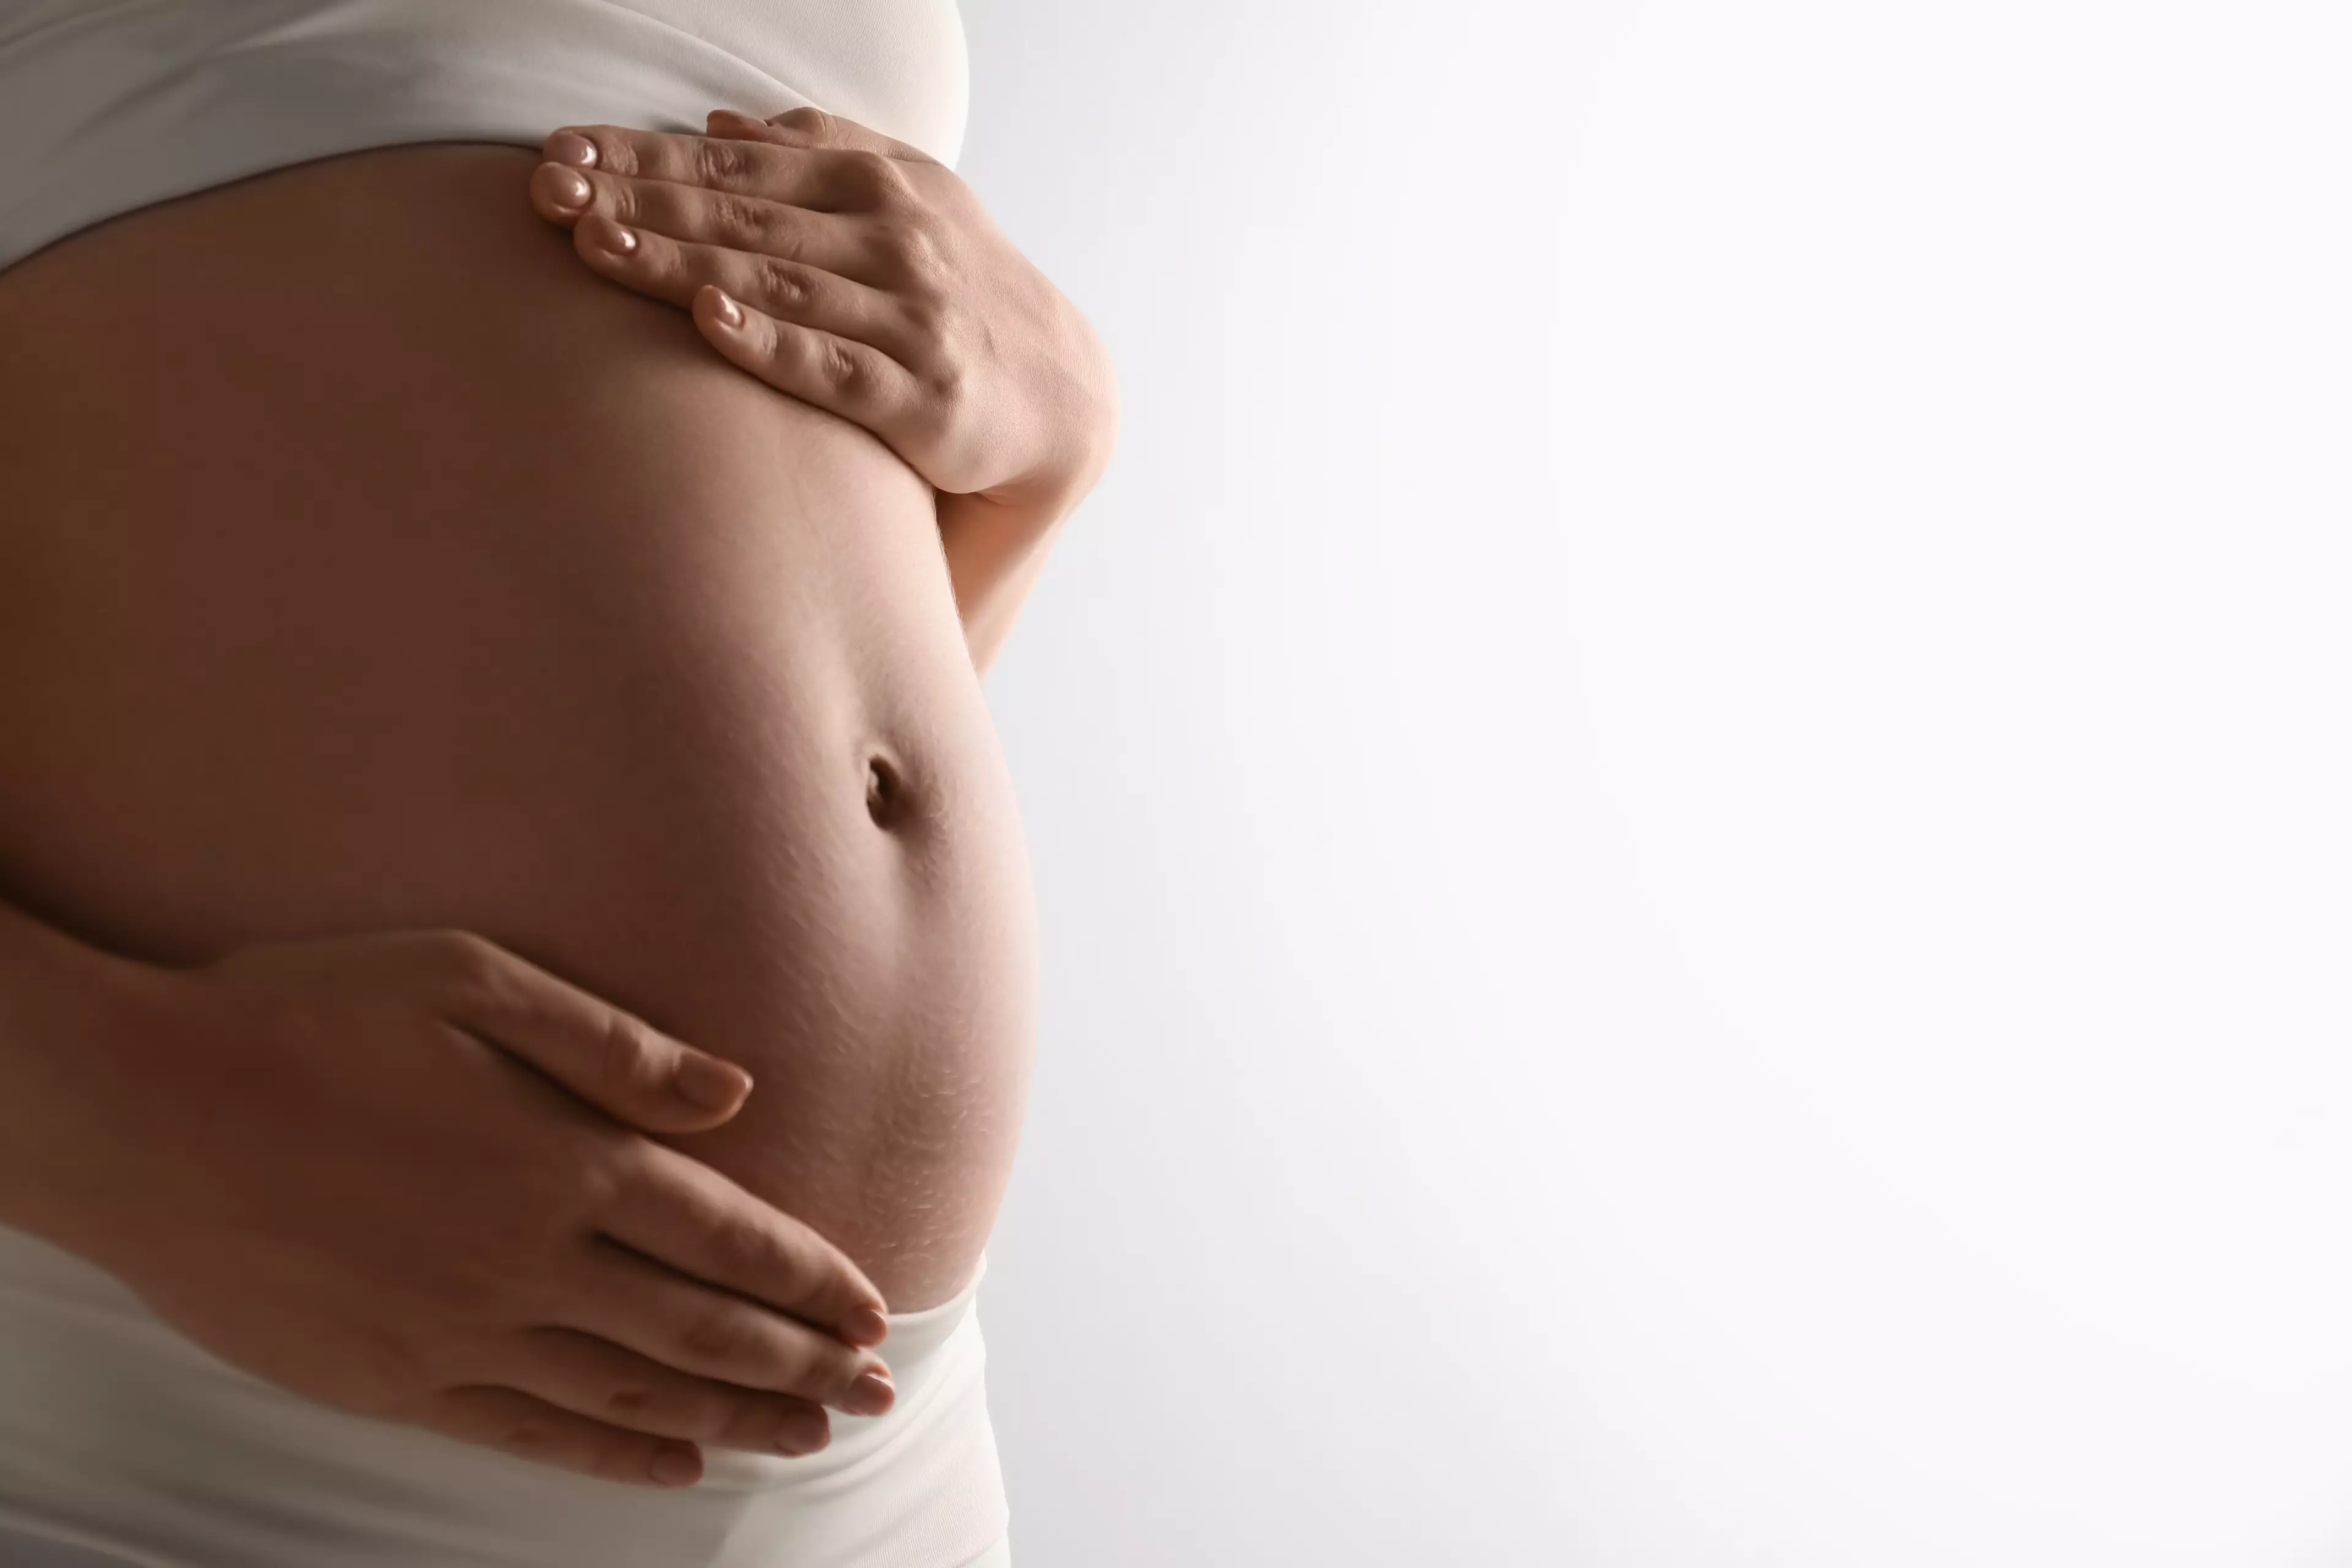 Chloasma specifically refers to skin darkening during pregnancy (